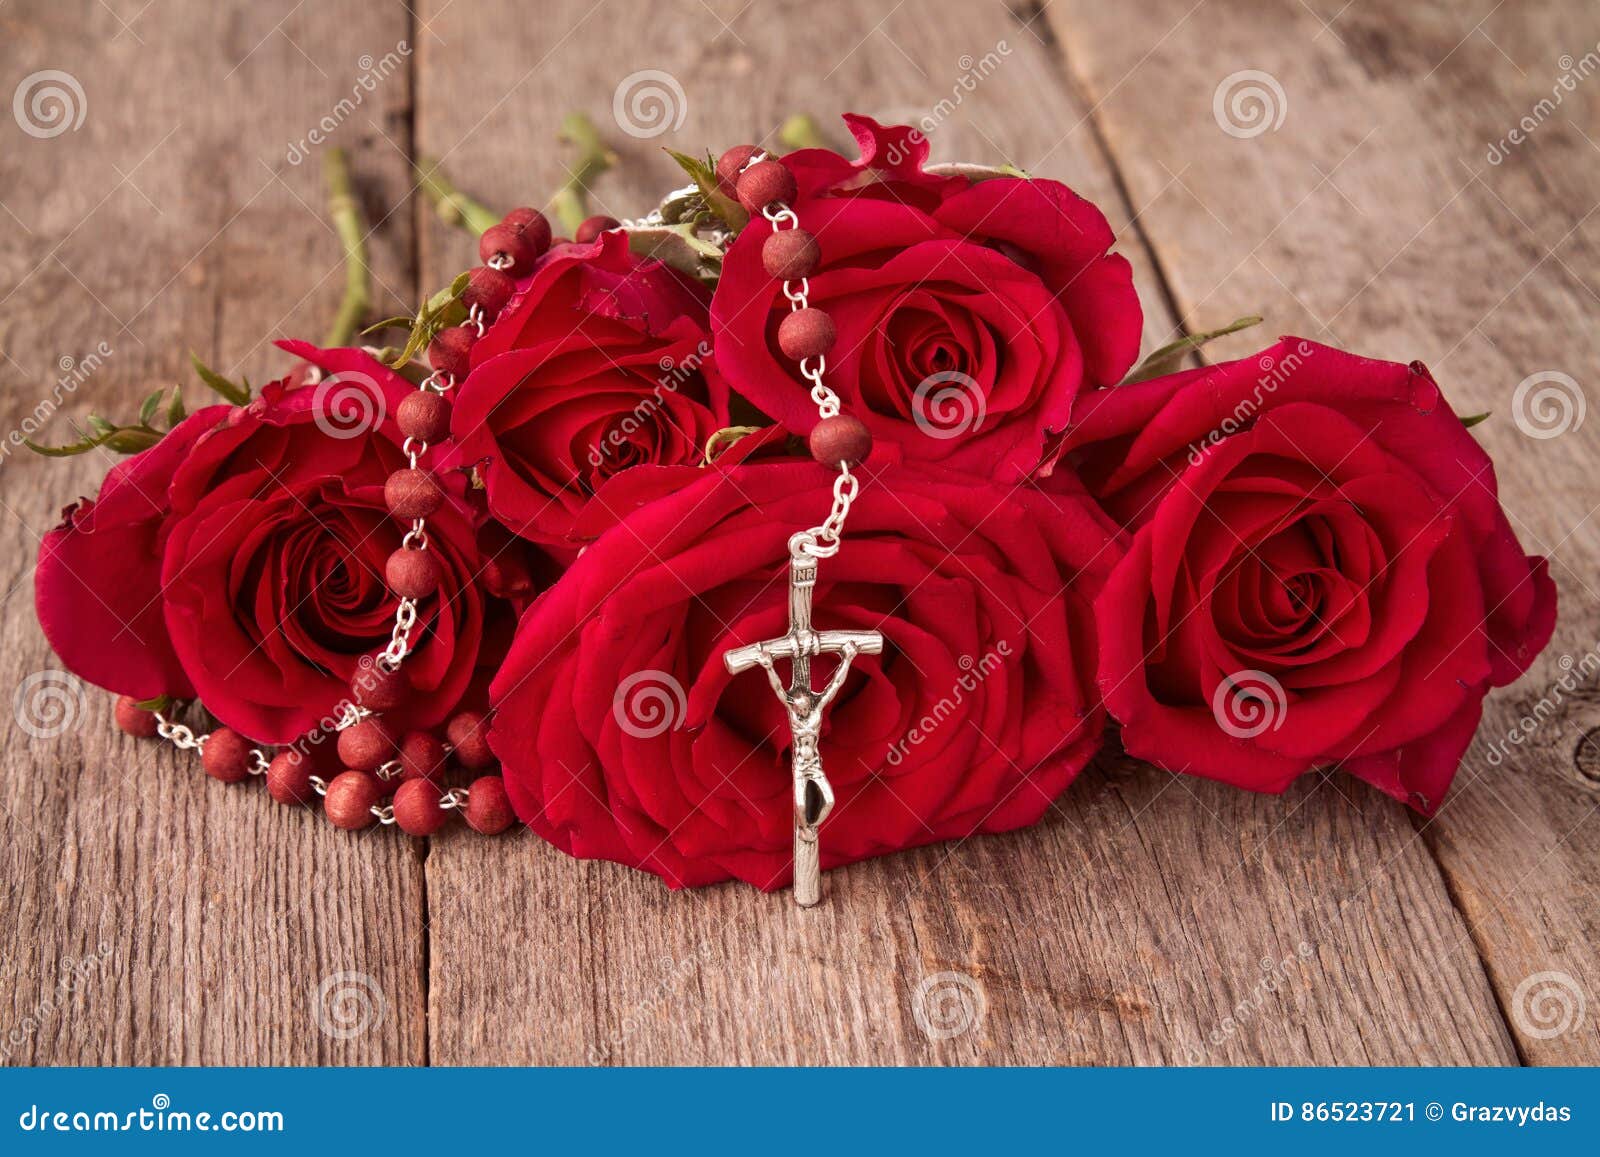 Resultado de imagen de Imagen catolica rosas rojas